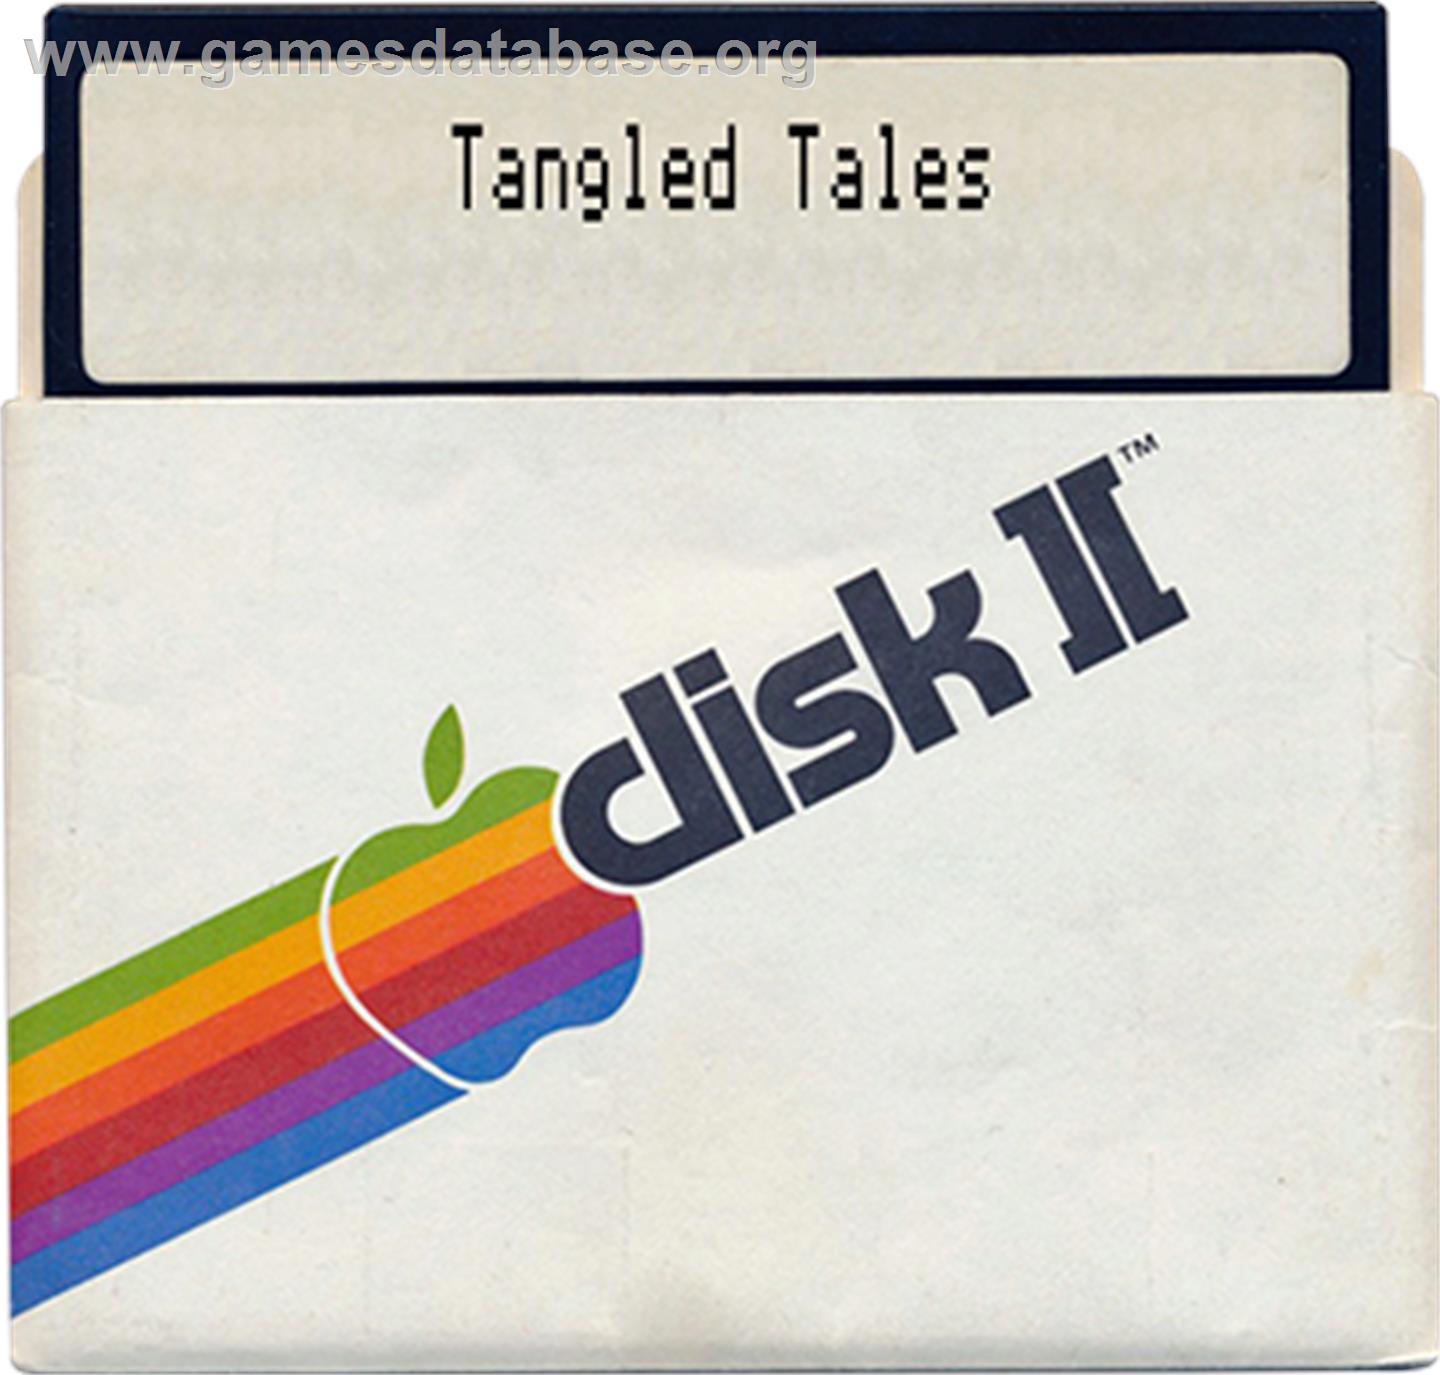 Tangled Tales - Apple II - Artwork - Disc